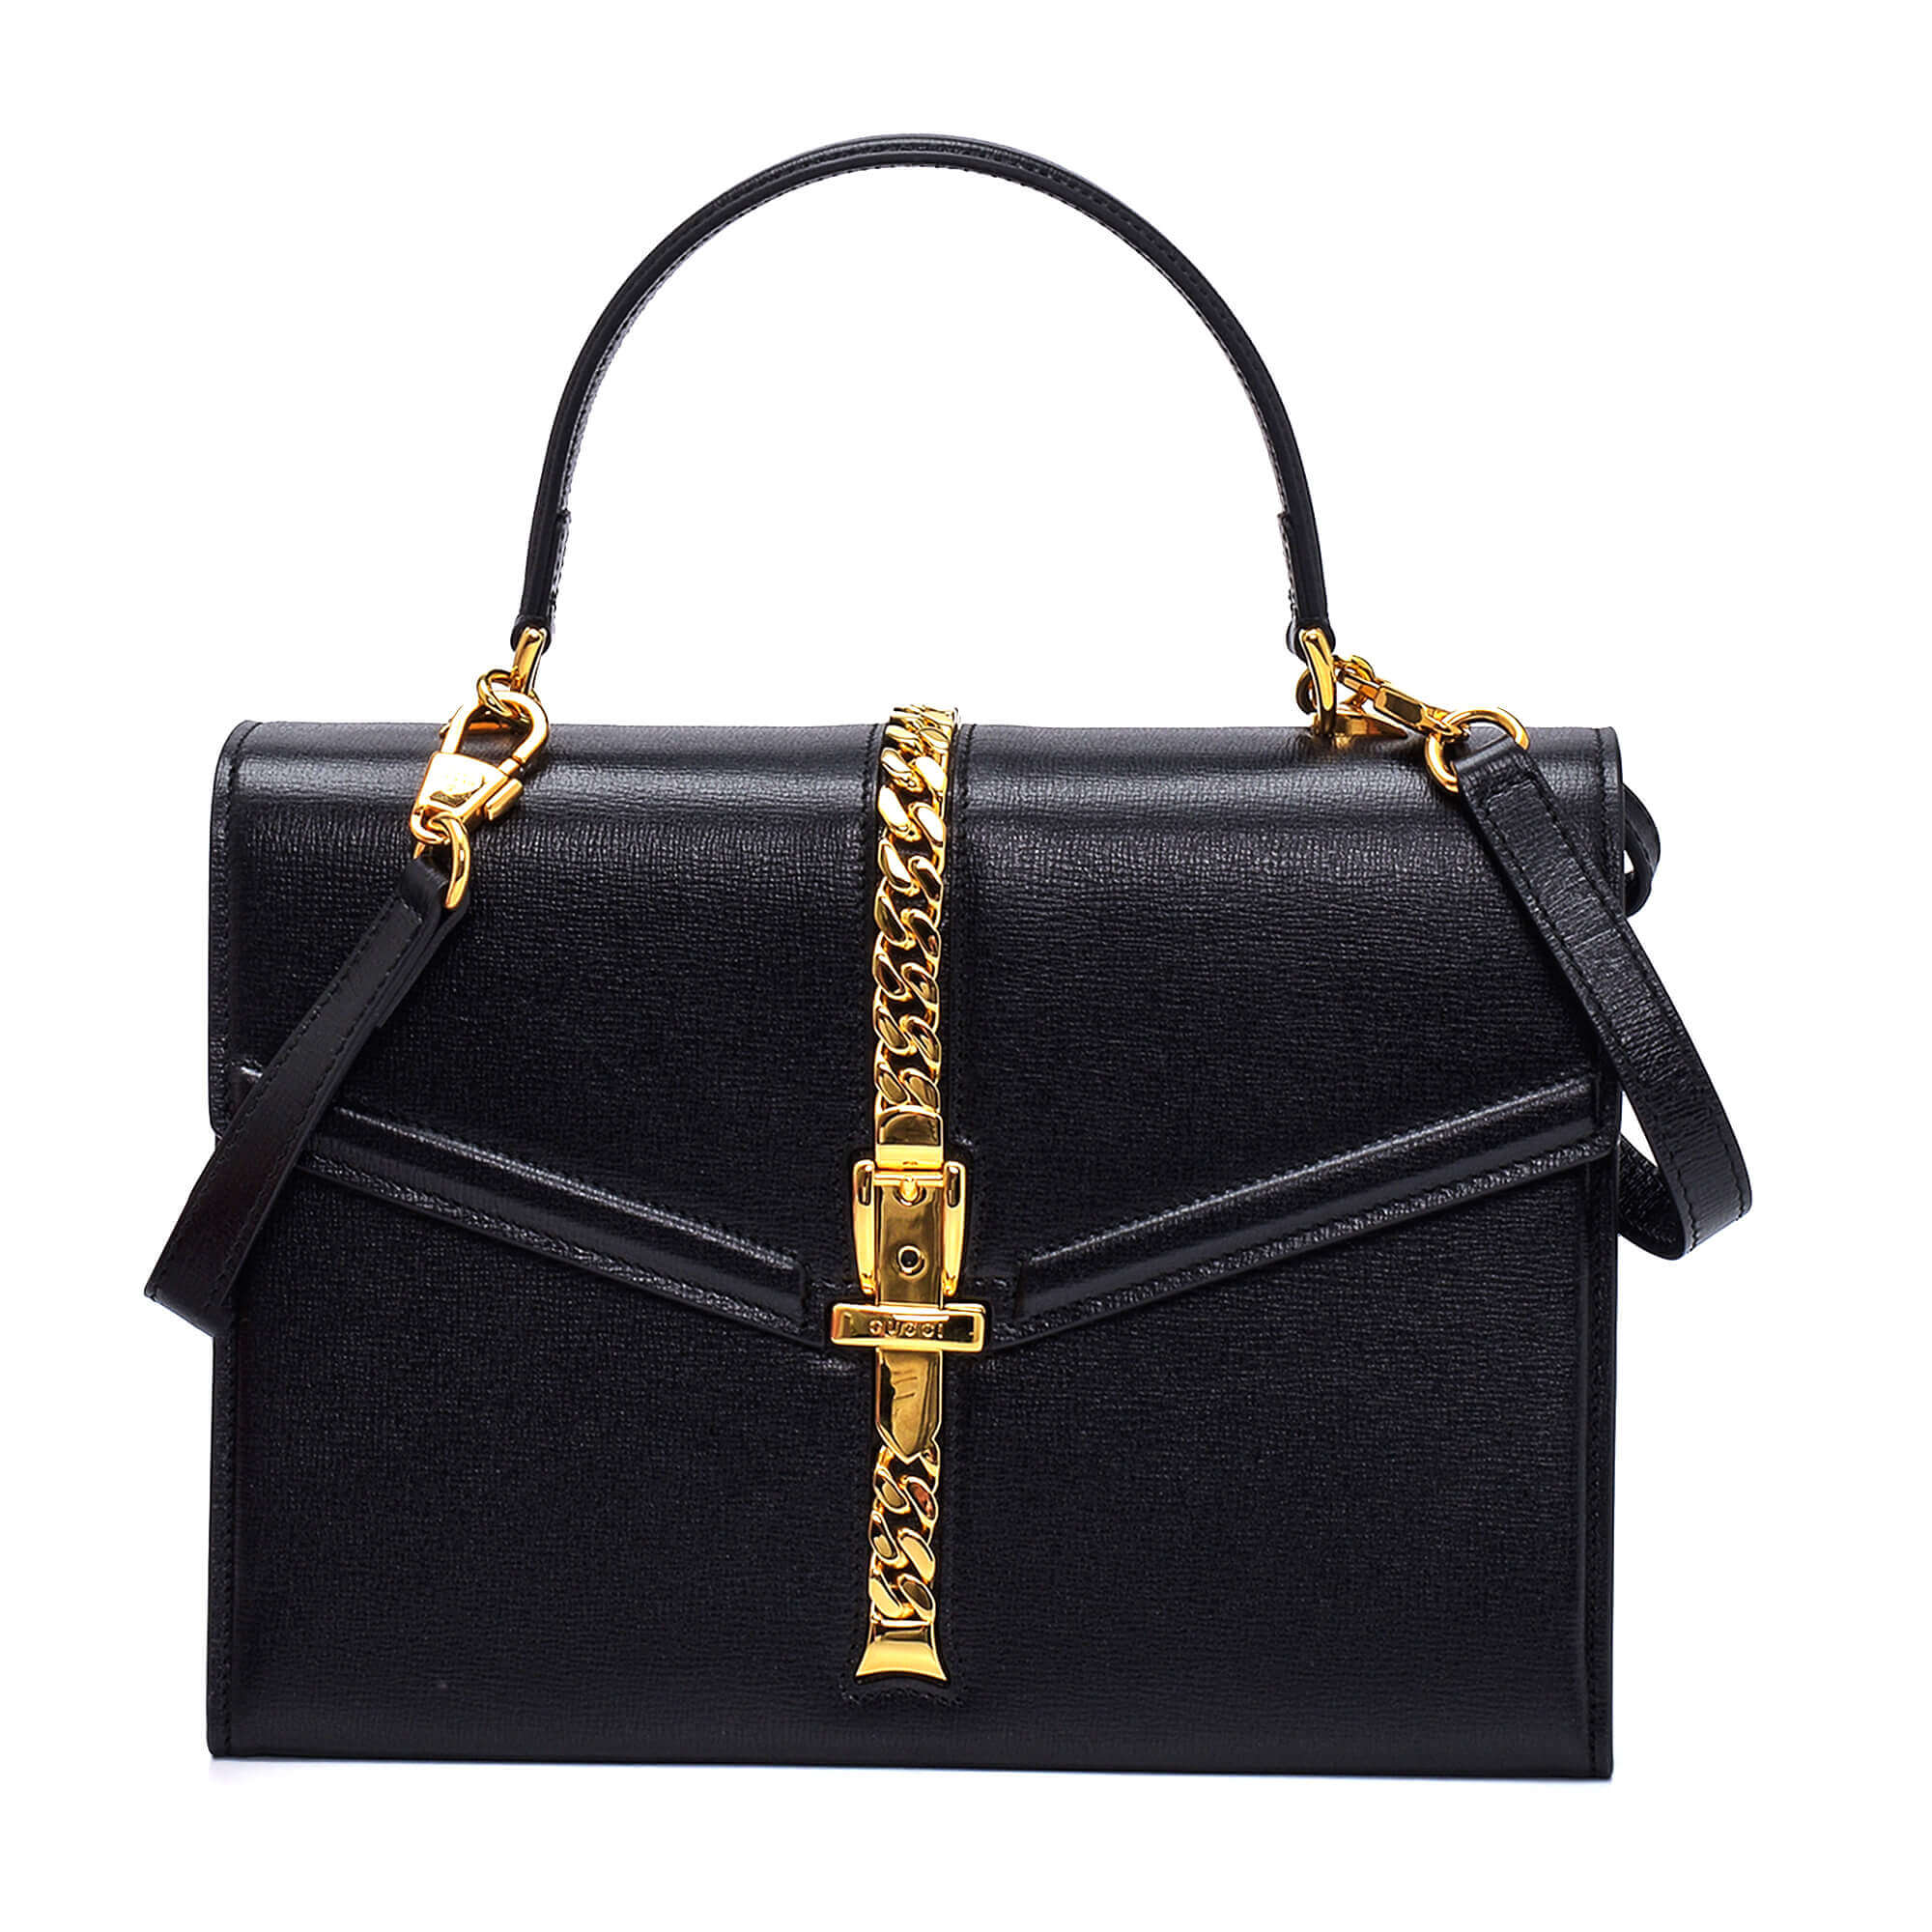 Gucci - Black Leather Sylvie 1969 Top Handle Bag